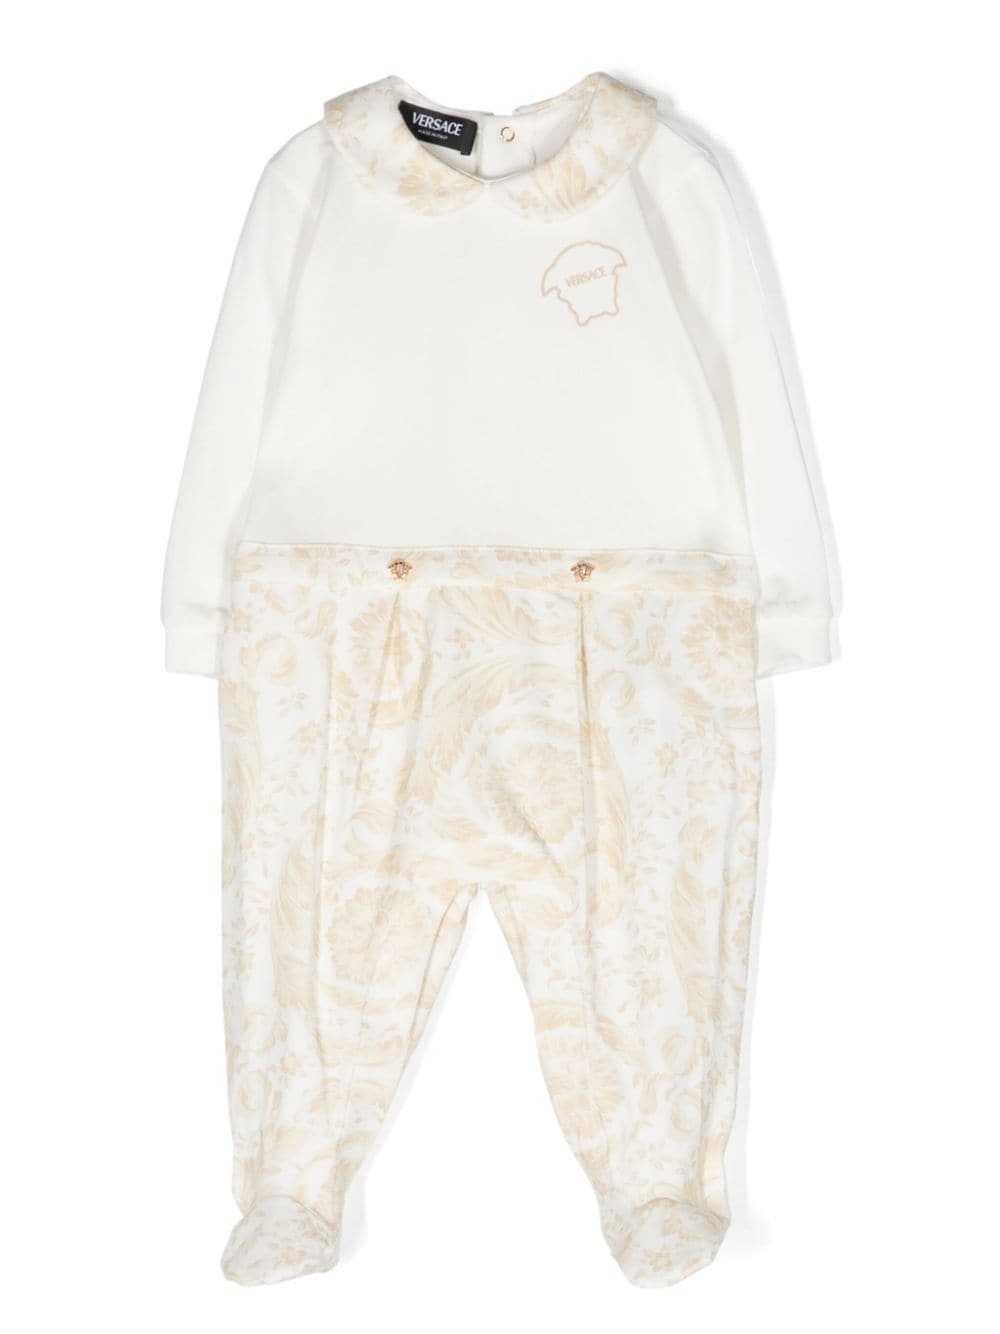 Barocco-print cotton pajamas<BR/><BR/>